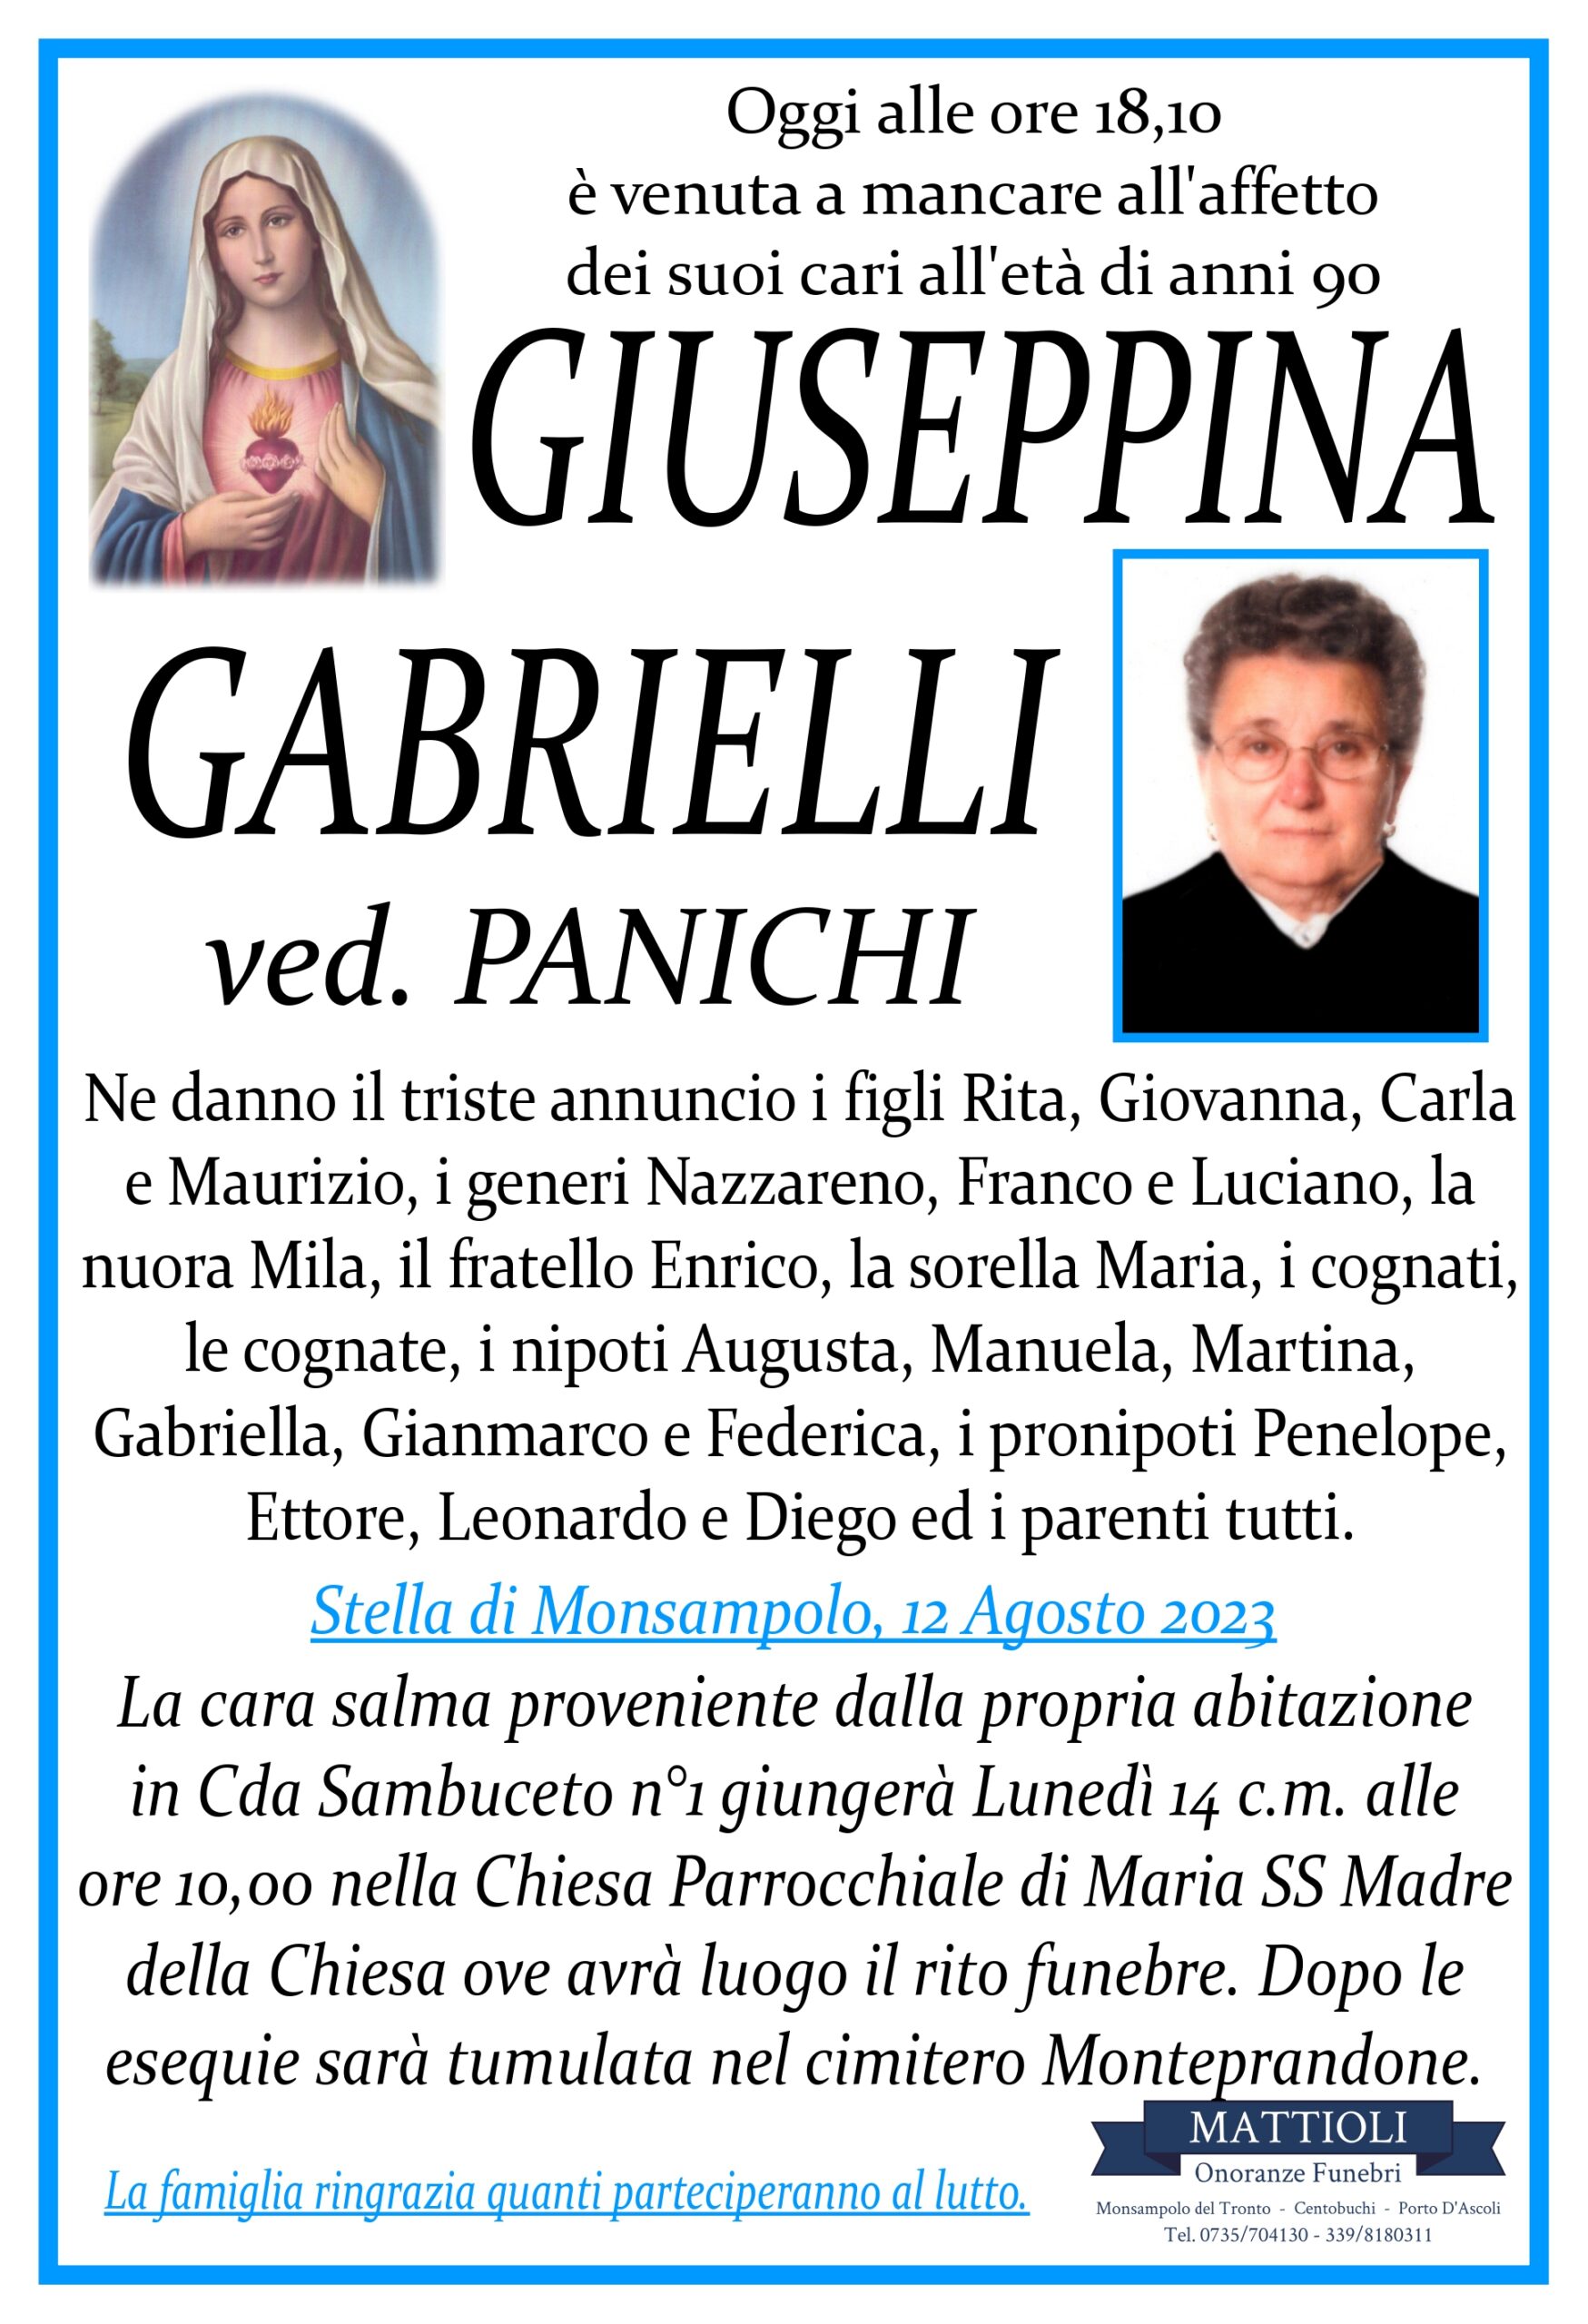 Giuseppina Gabrielli